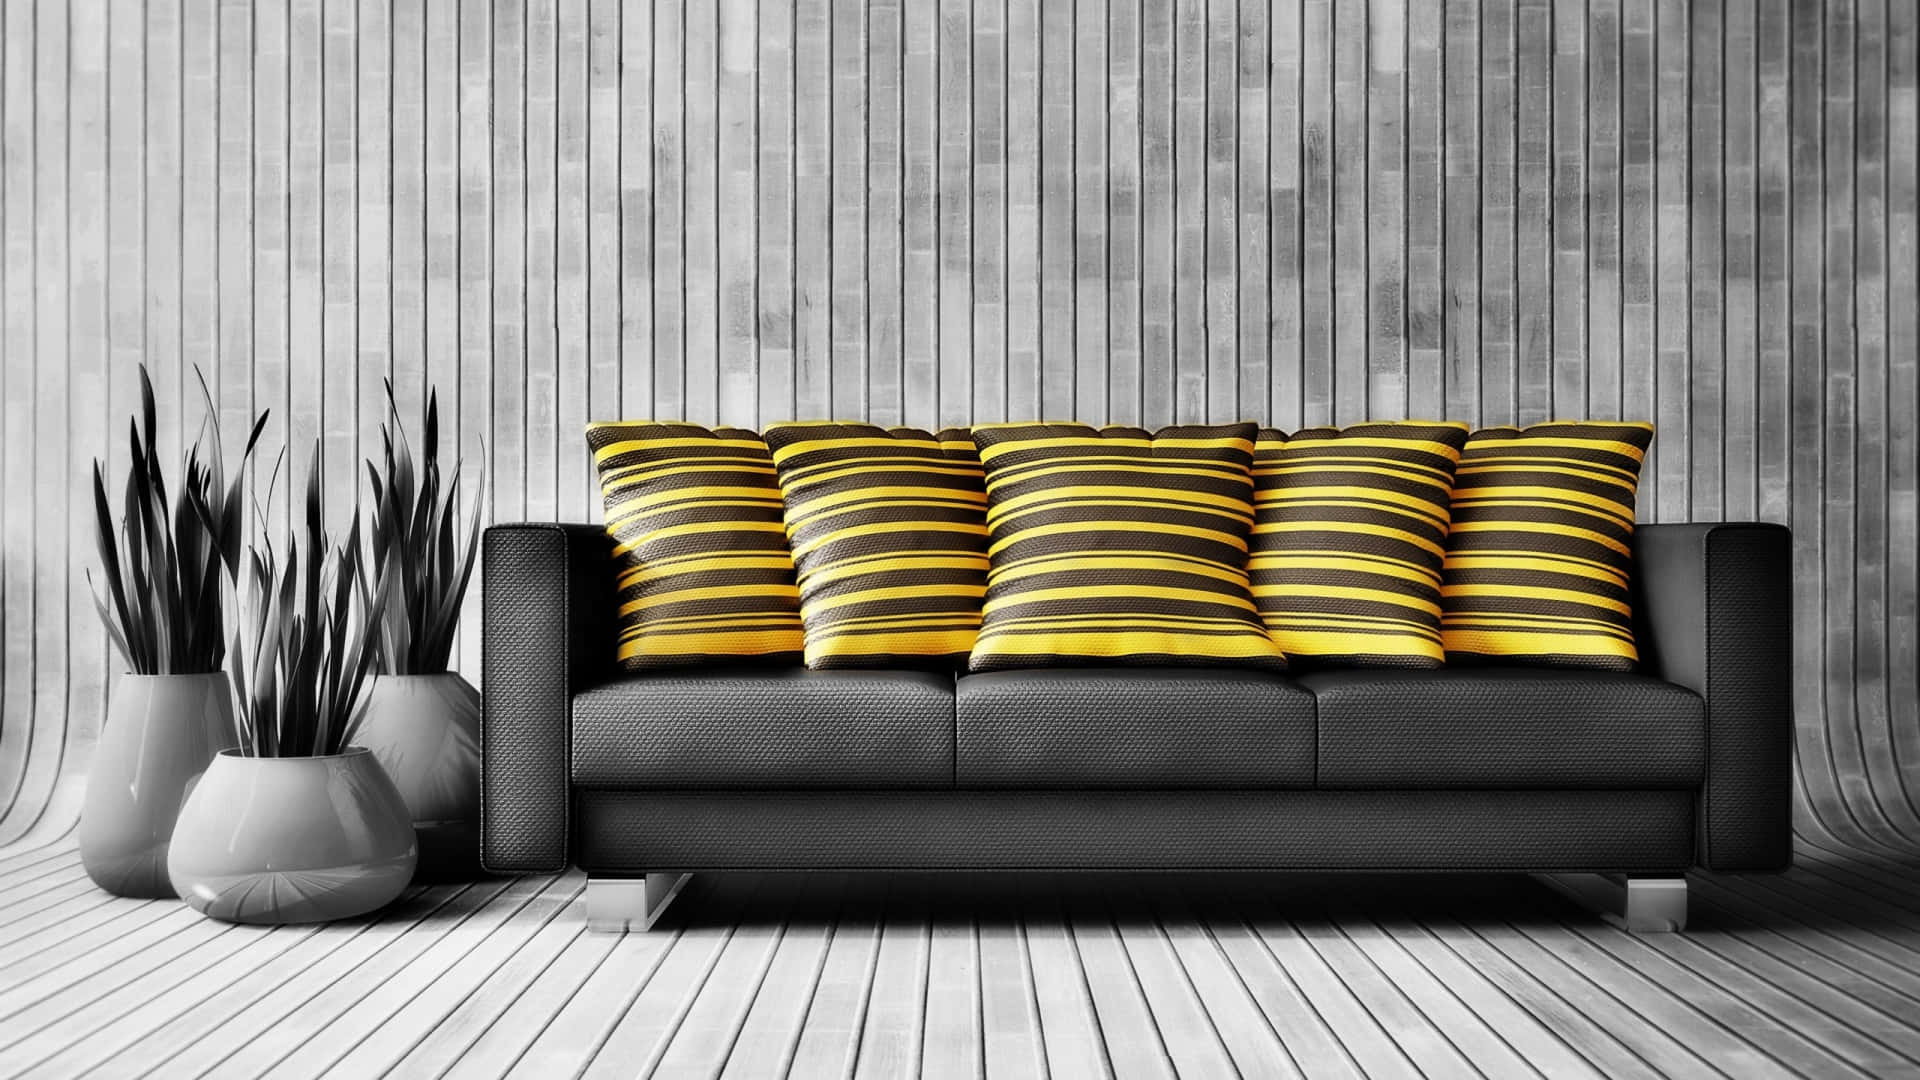 Bumblebee Themed Interior Sofa Wallpaper